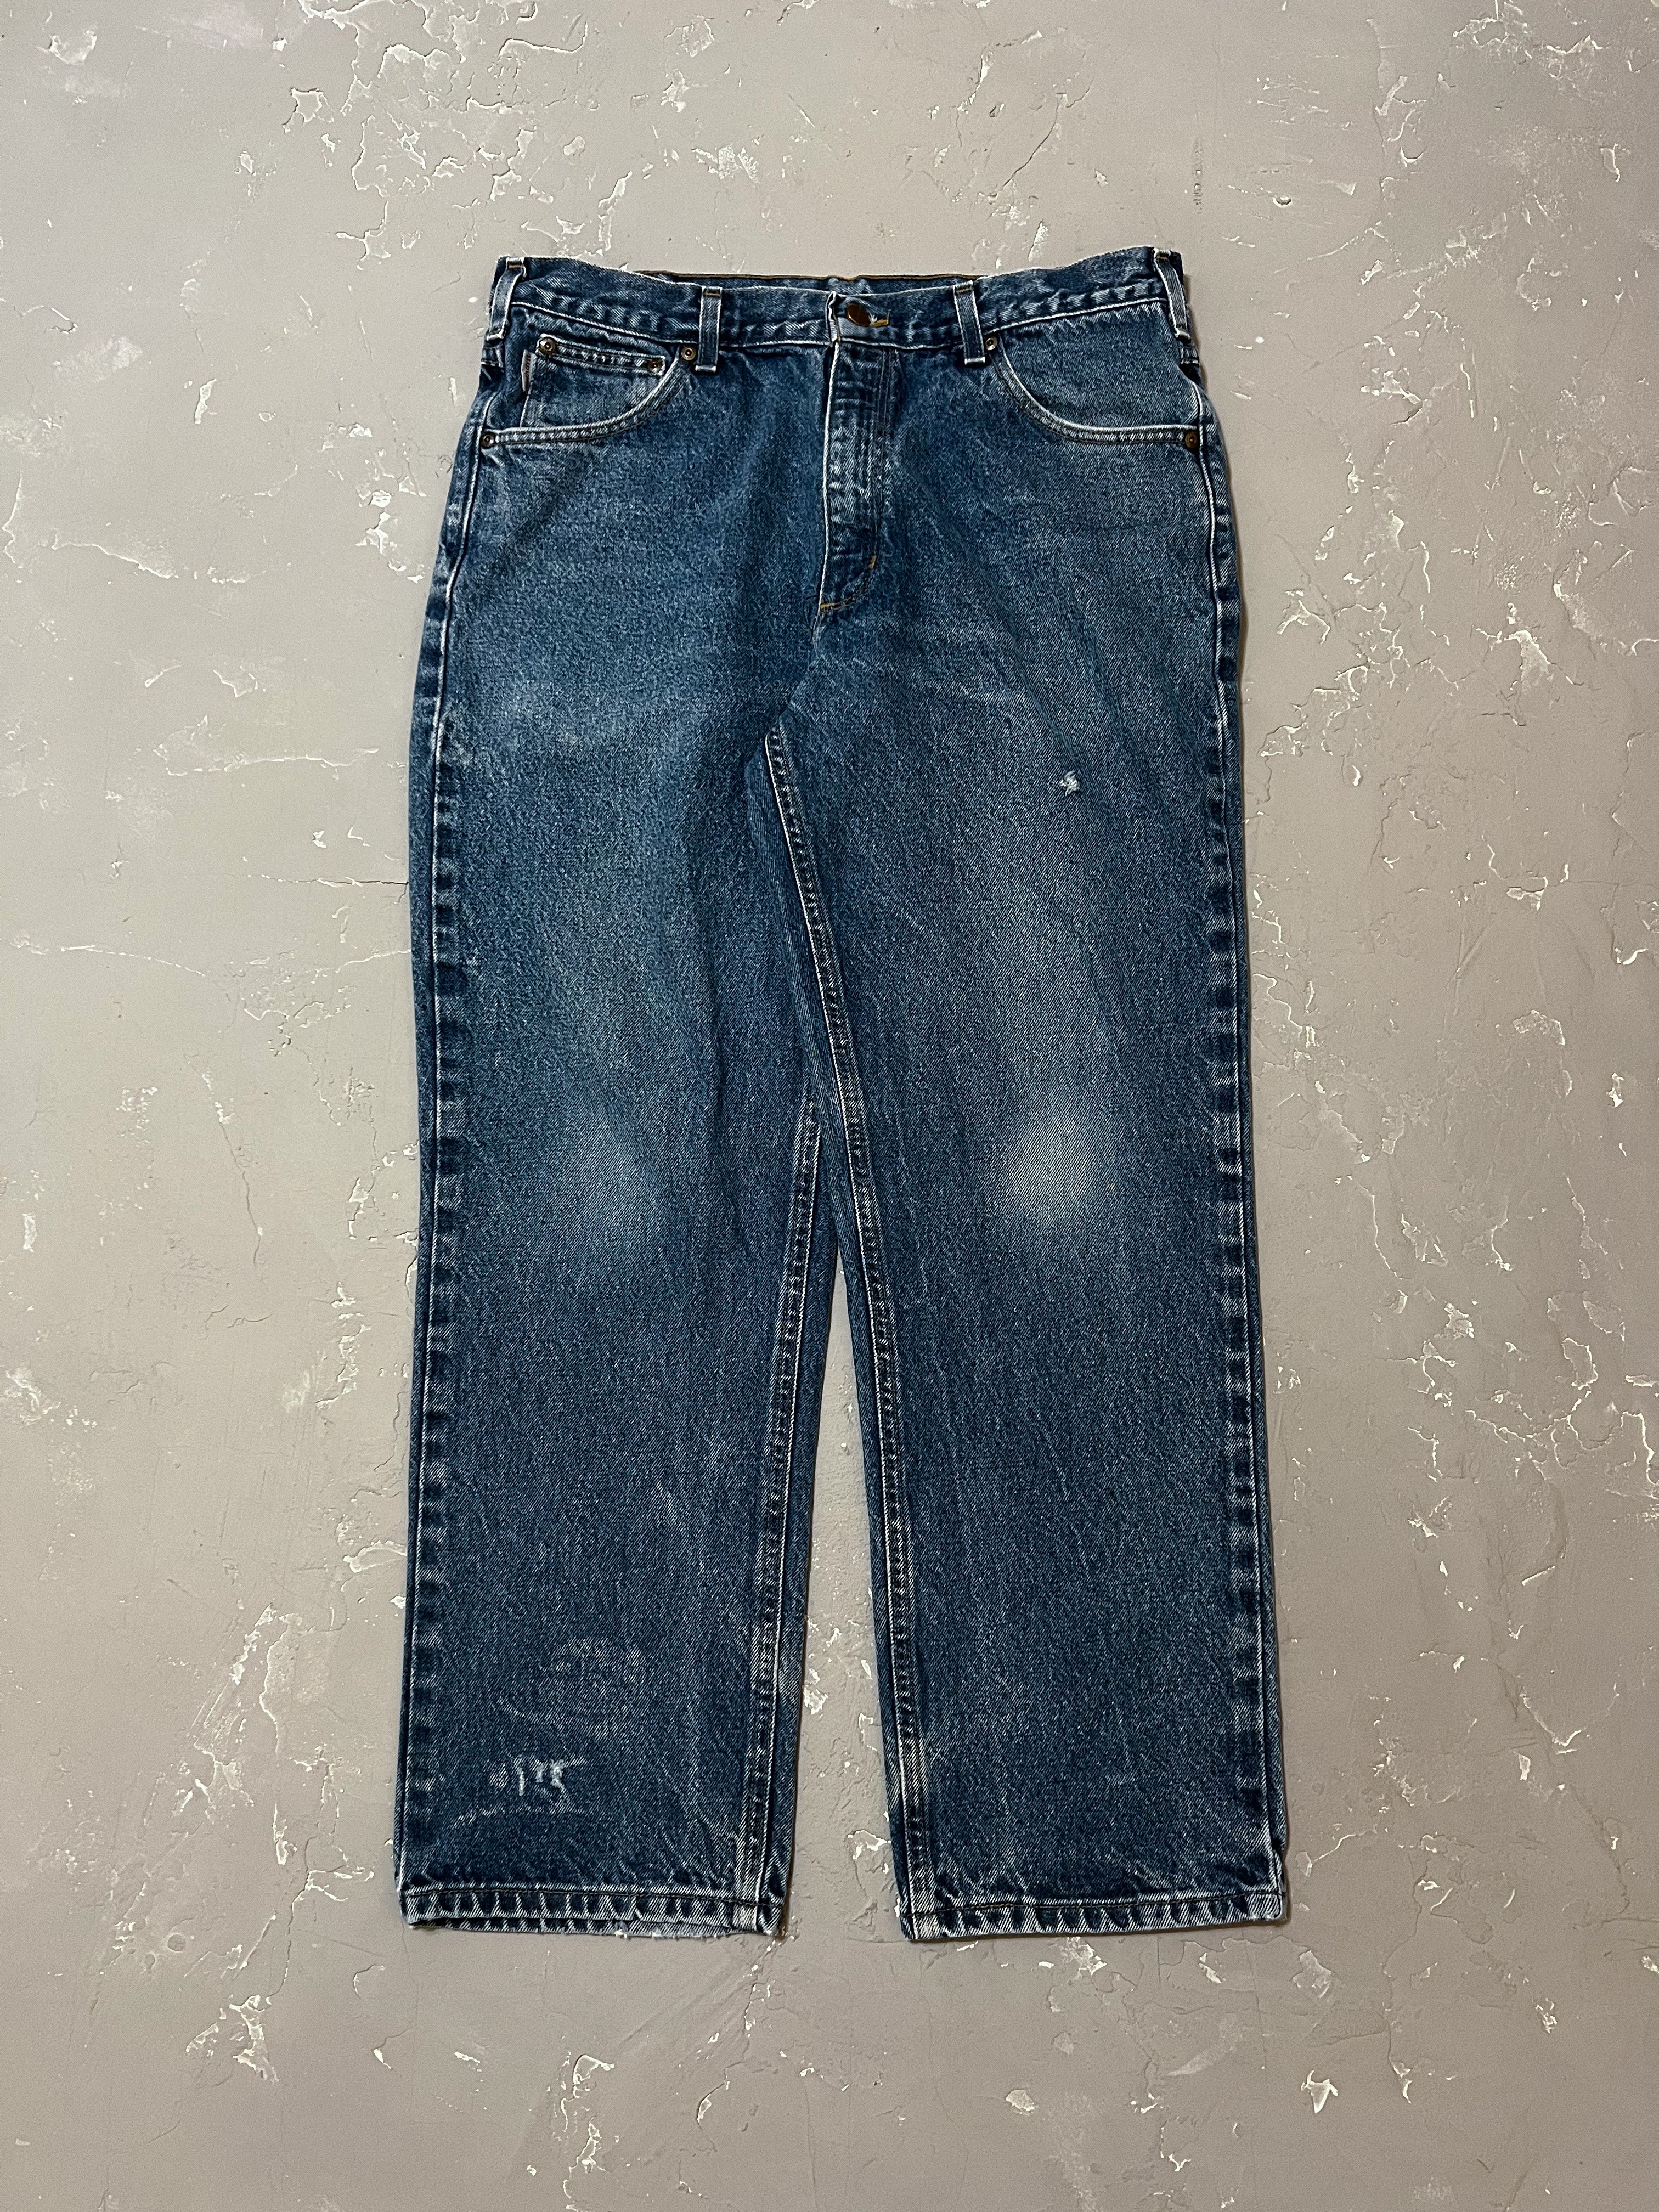 Carhartt Work Jeans [35 x 30]